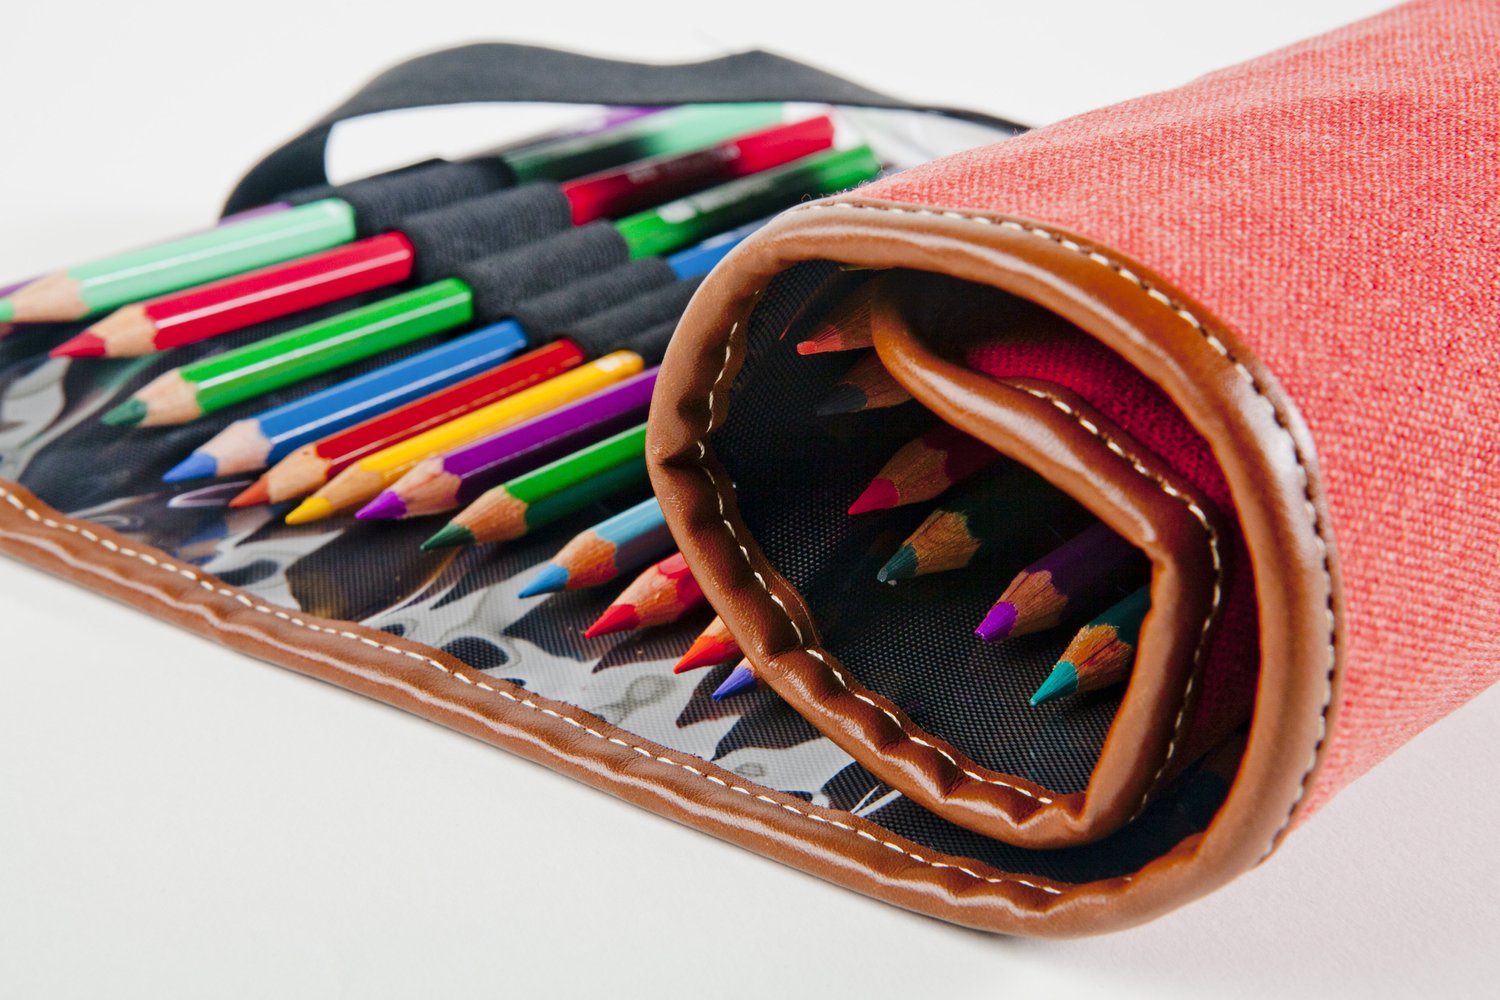 Pencil Case Roll — fortyonehundred